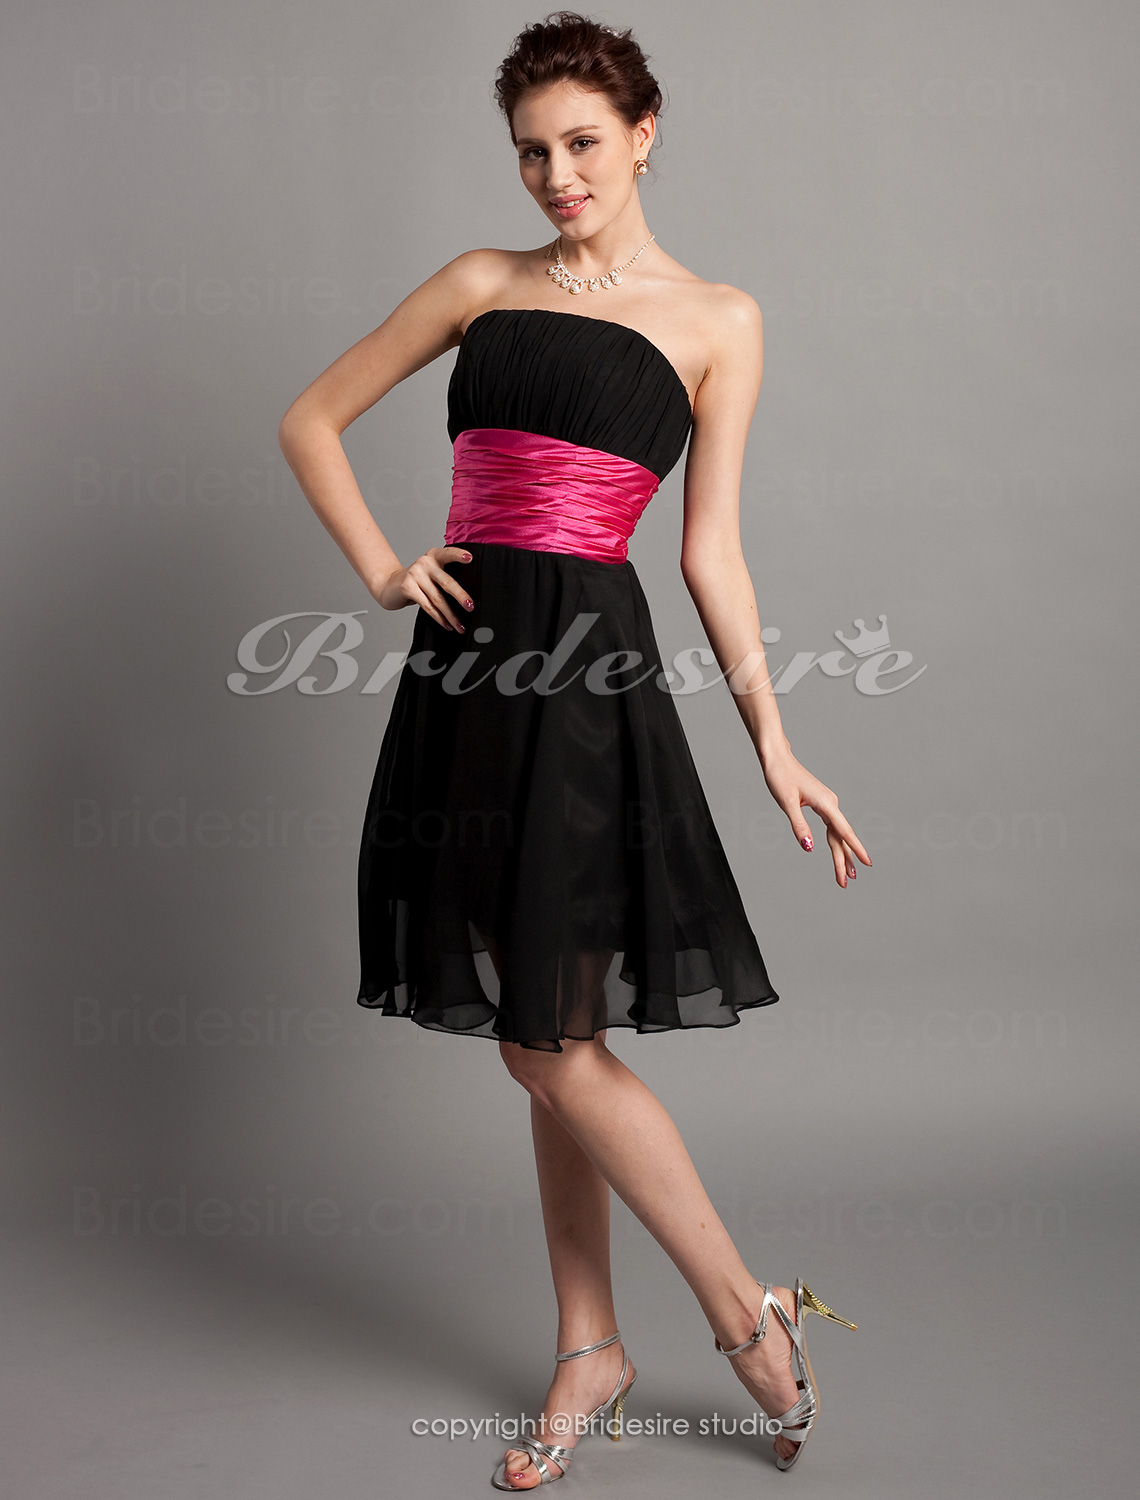 A-line Stretch Satin Chiffon Knee-length Strapless Bridesmaid Dress